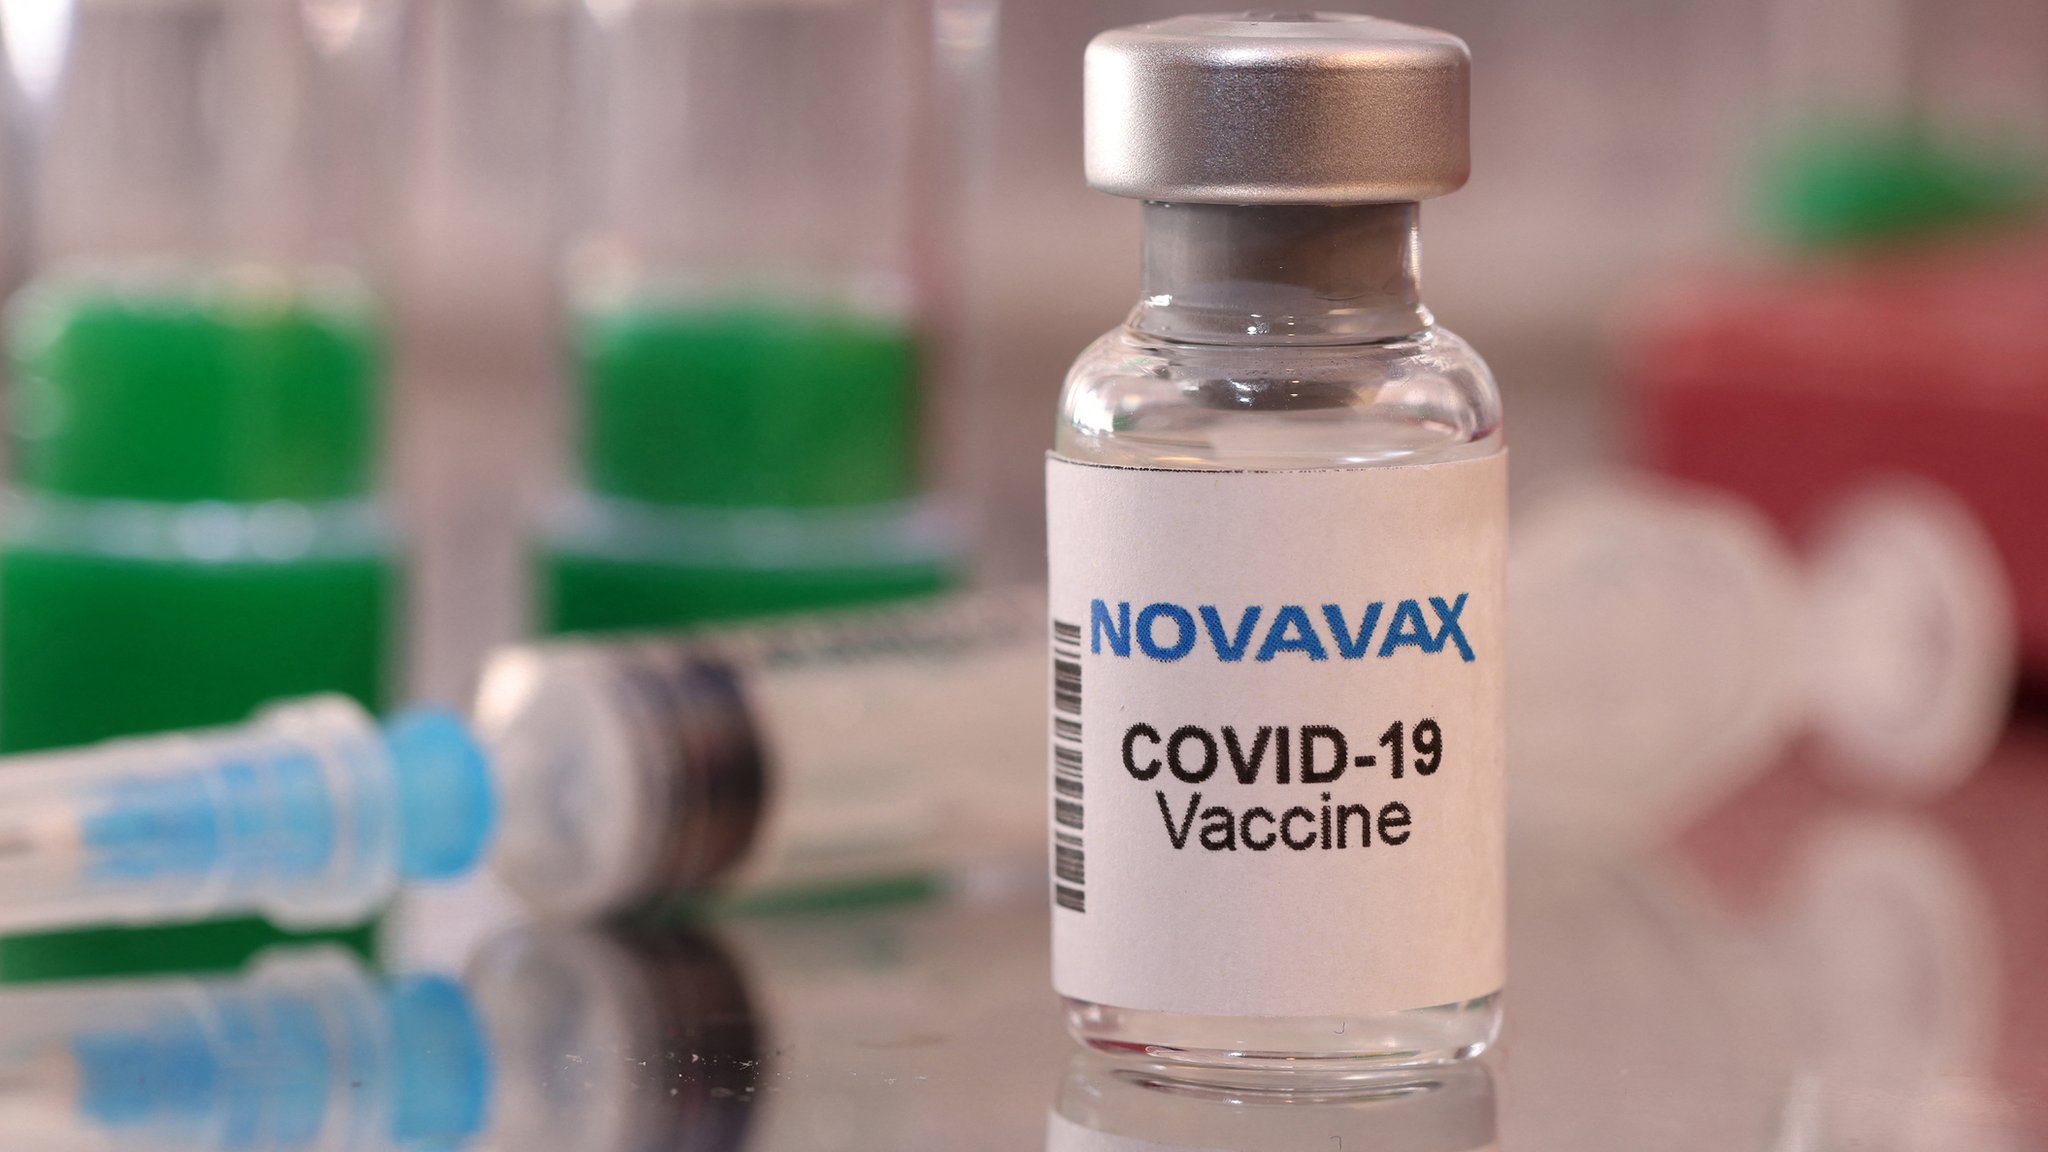 Novavax Covid jab approved by UK drugs regulator - BBC News